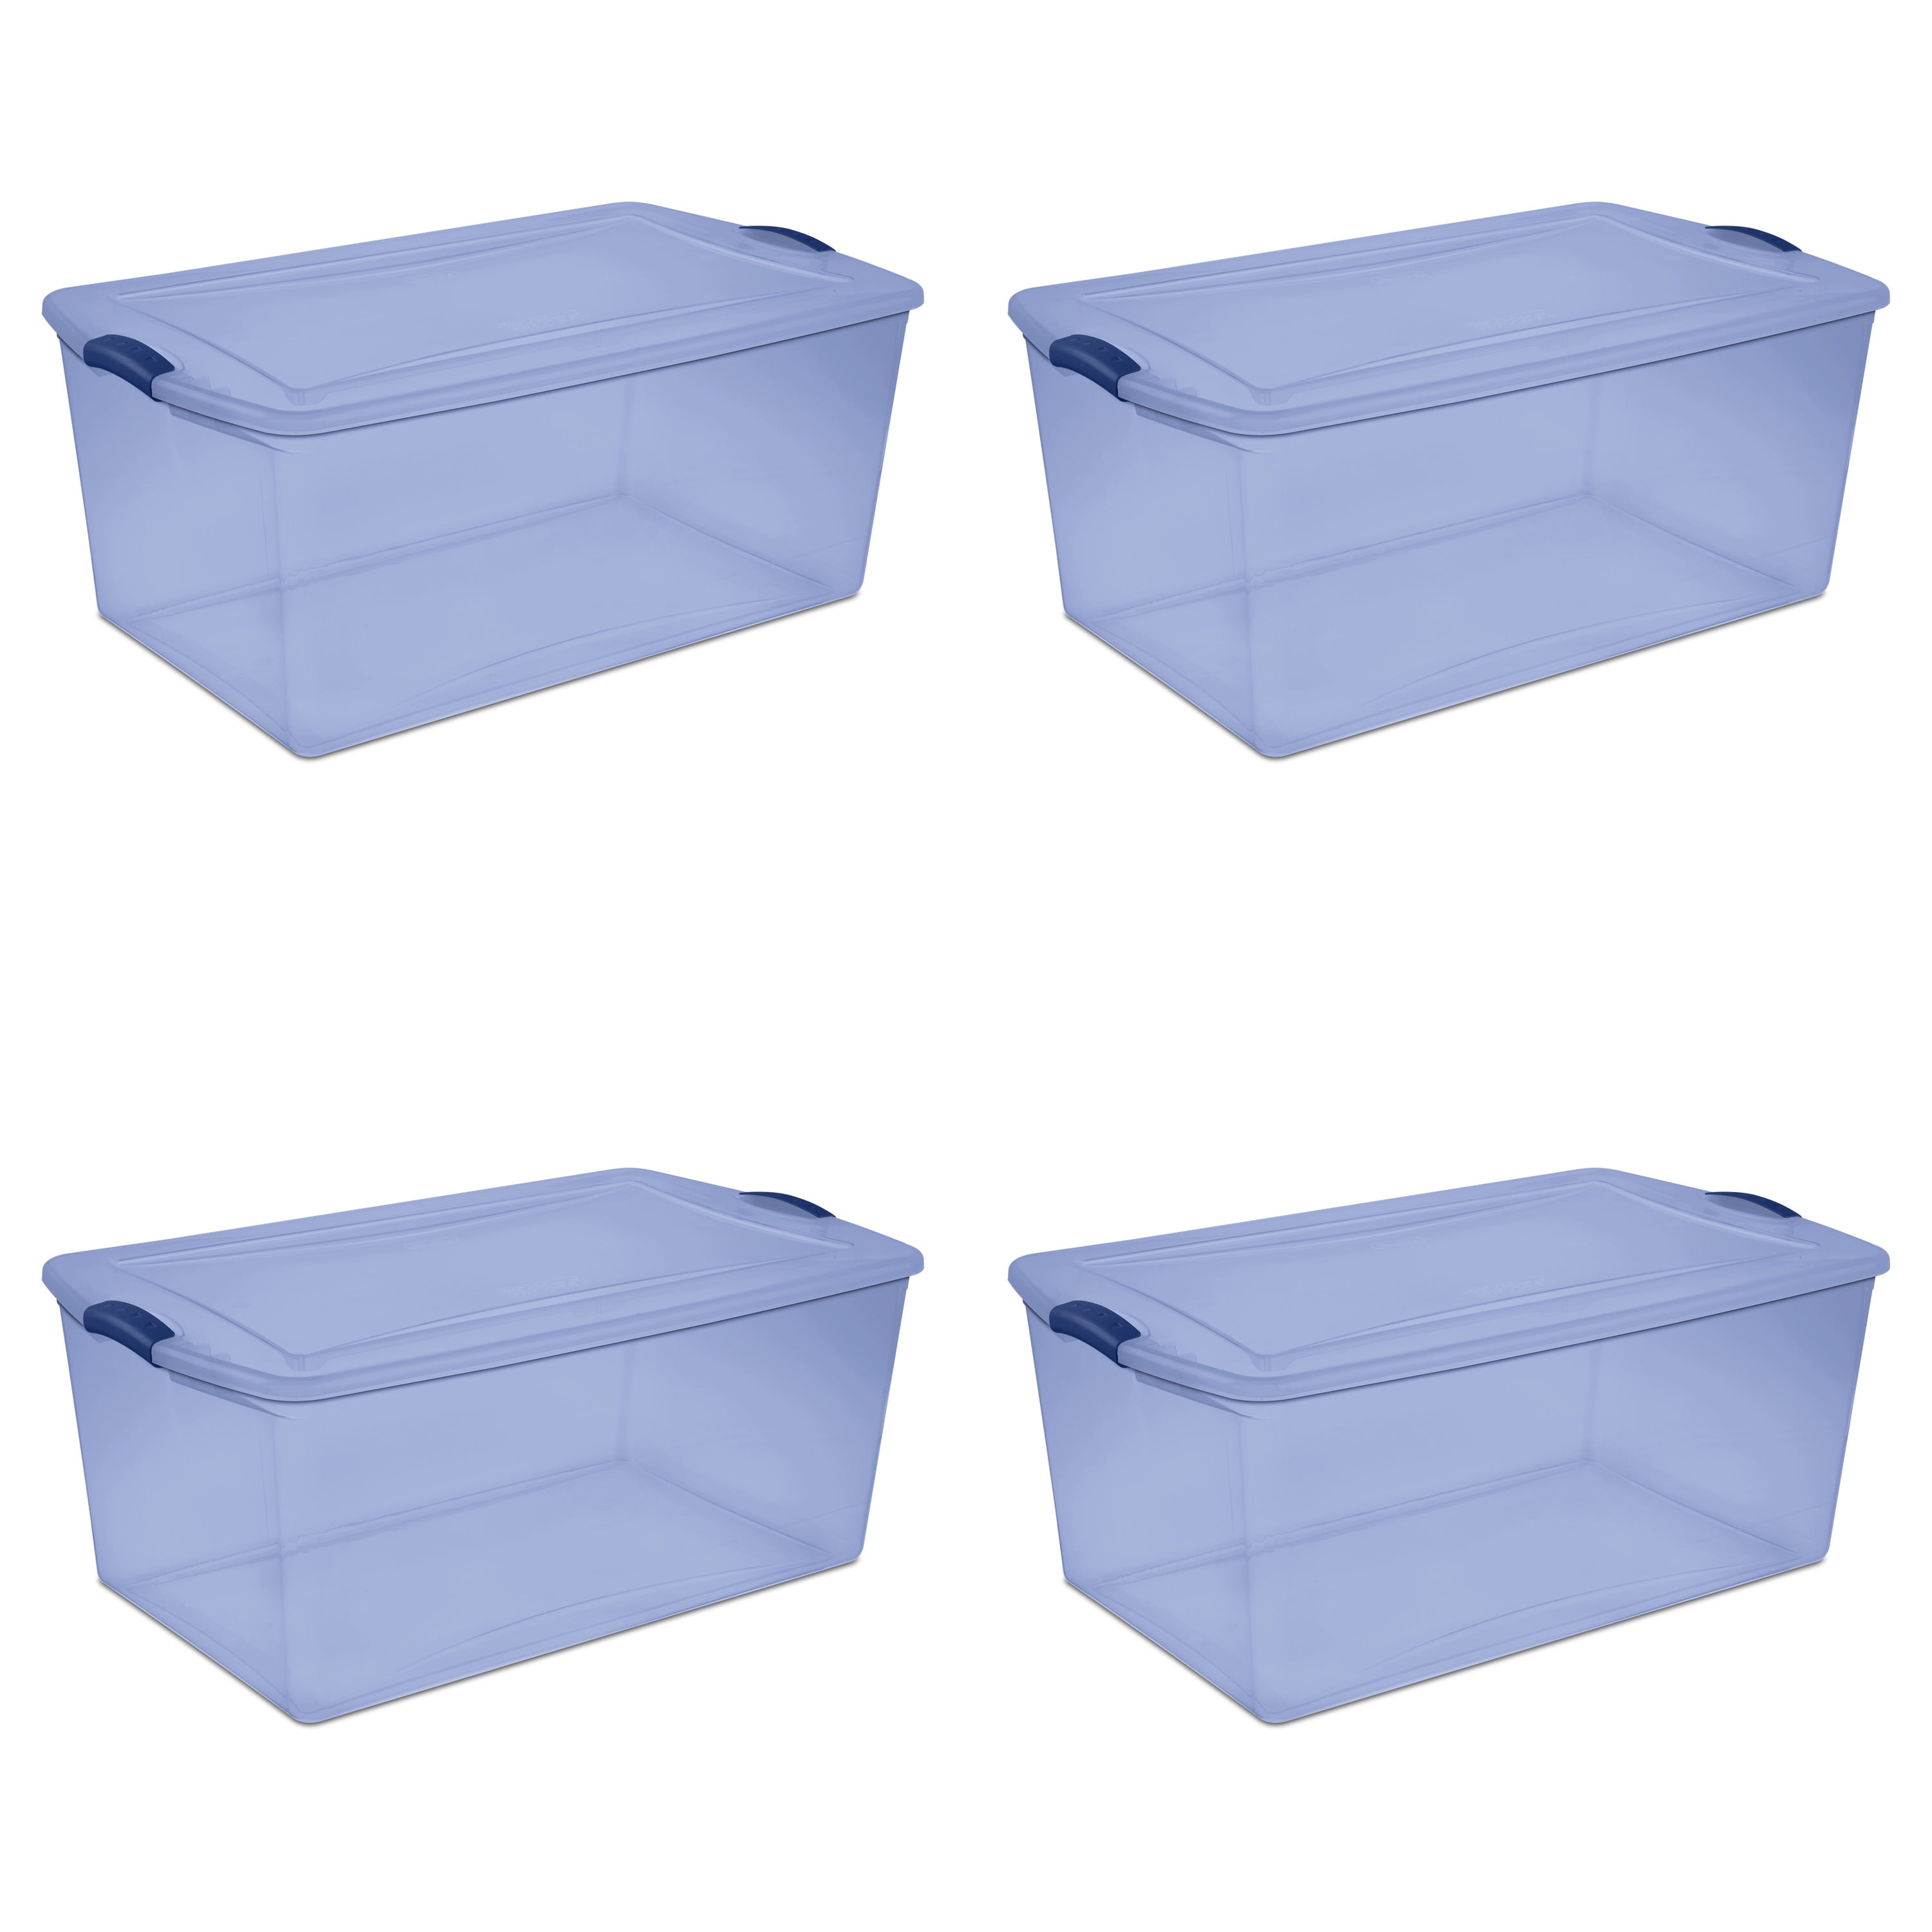 Sterilite 64 qt. Latching Box Plastic, Blue Tint